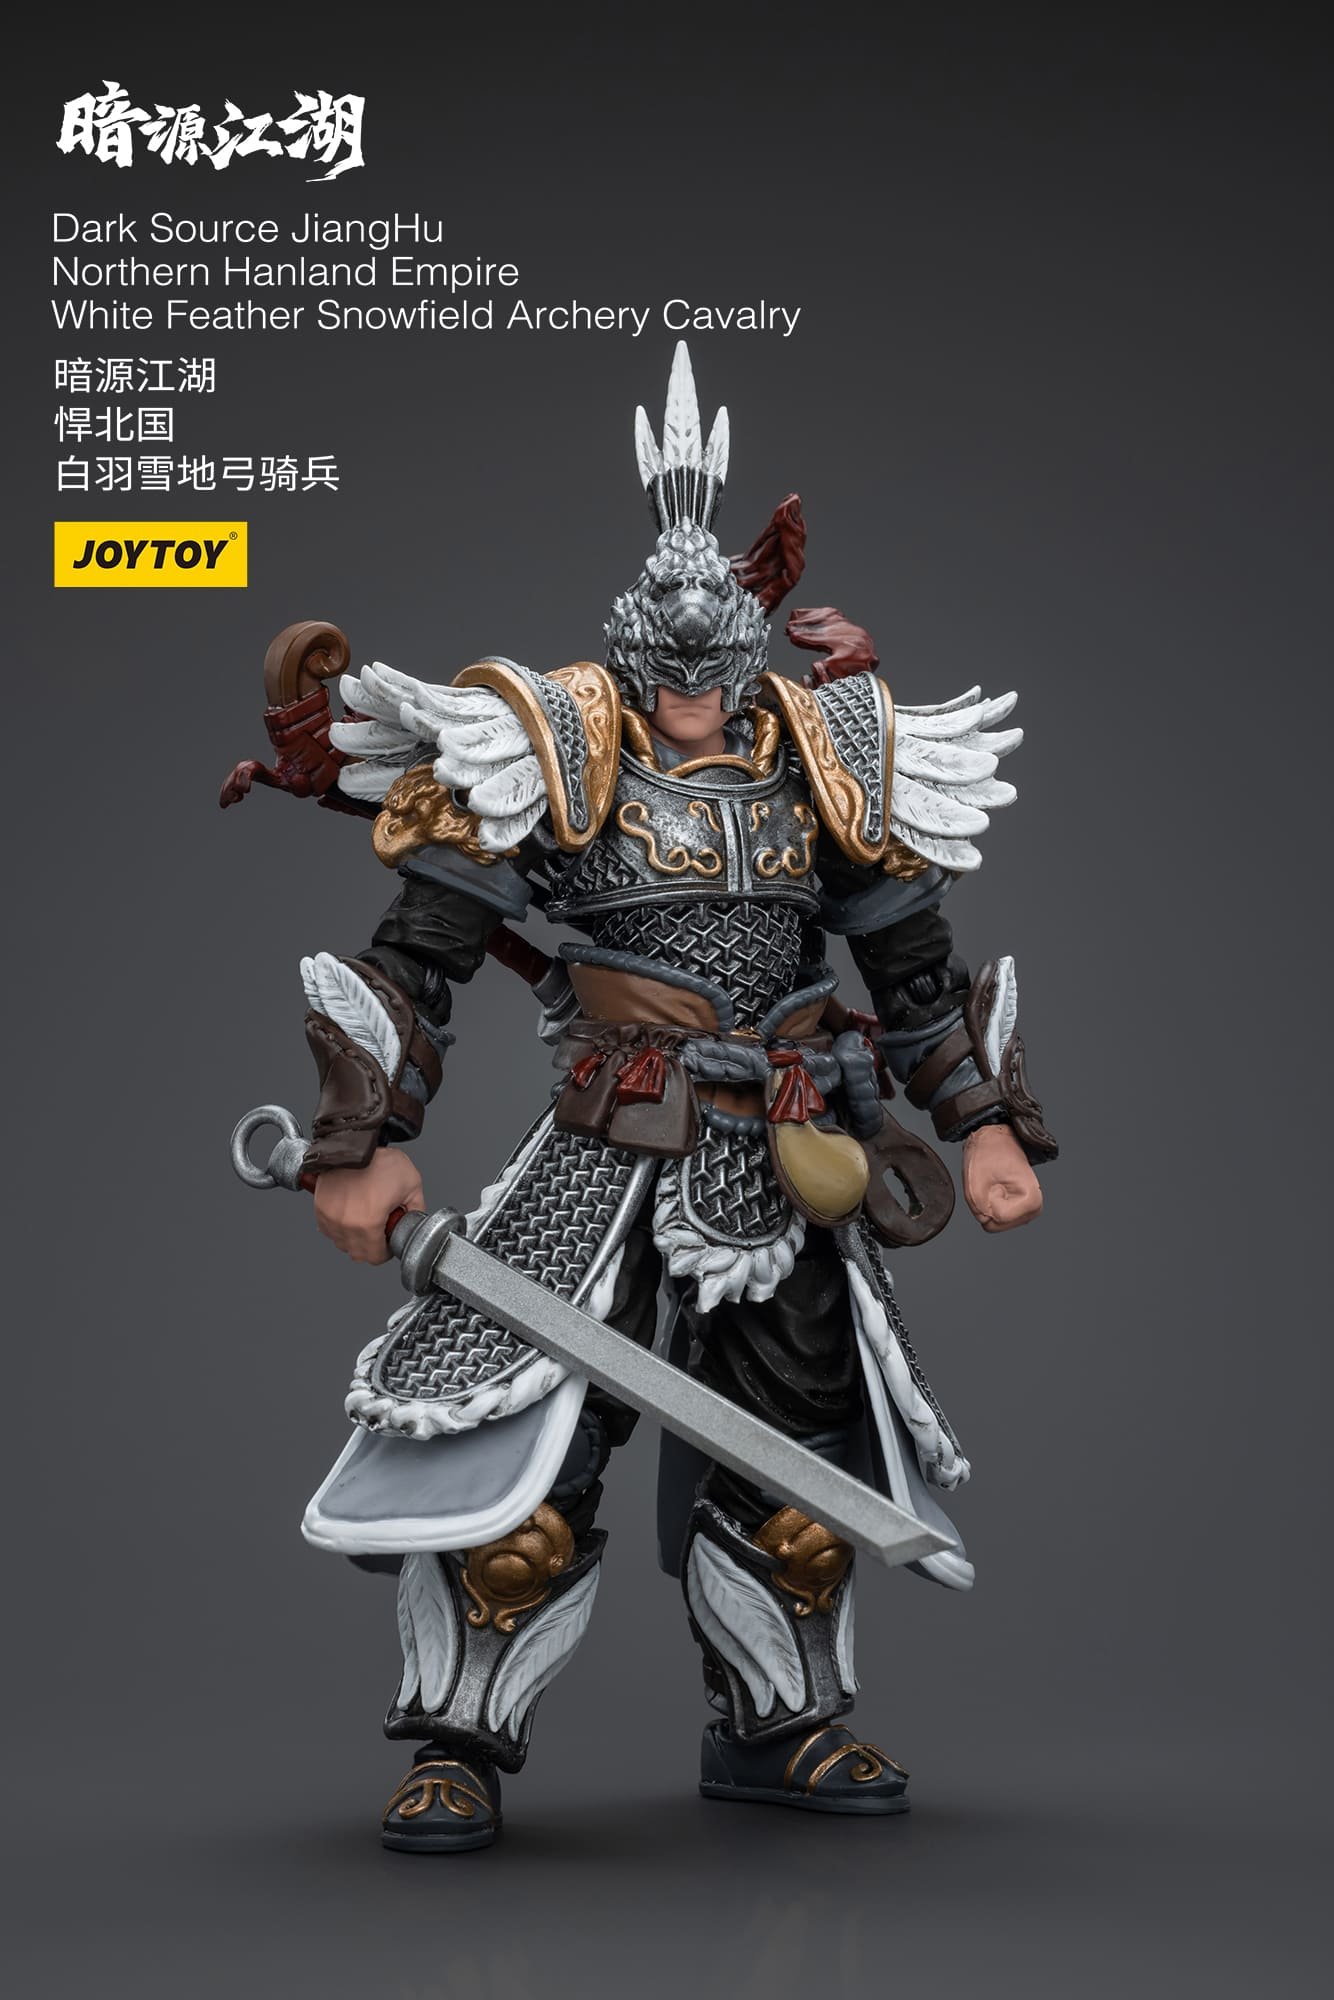 JOYTOY Dark Source JiangHu Northern Hanland Empire White Feather Snowfield Archery Cavalry 2 - Joytoy Figure